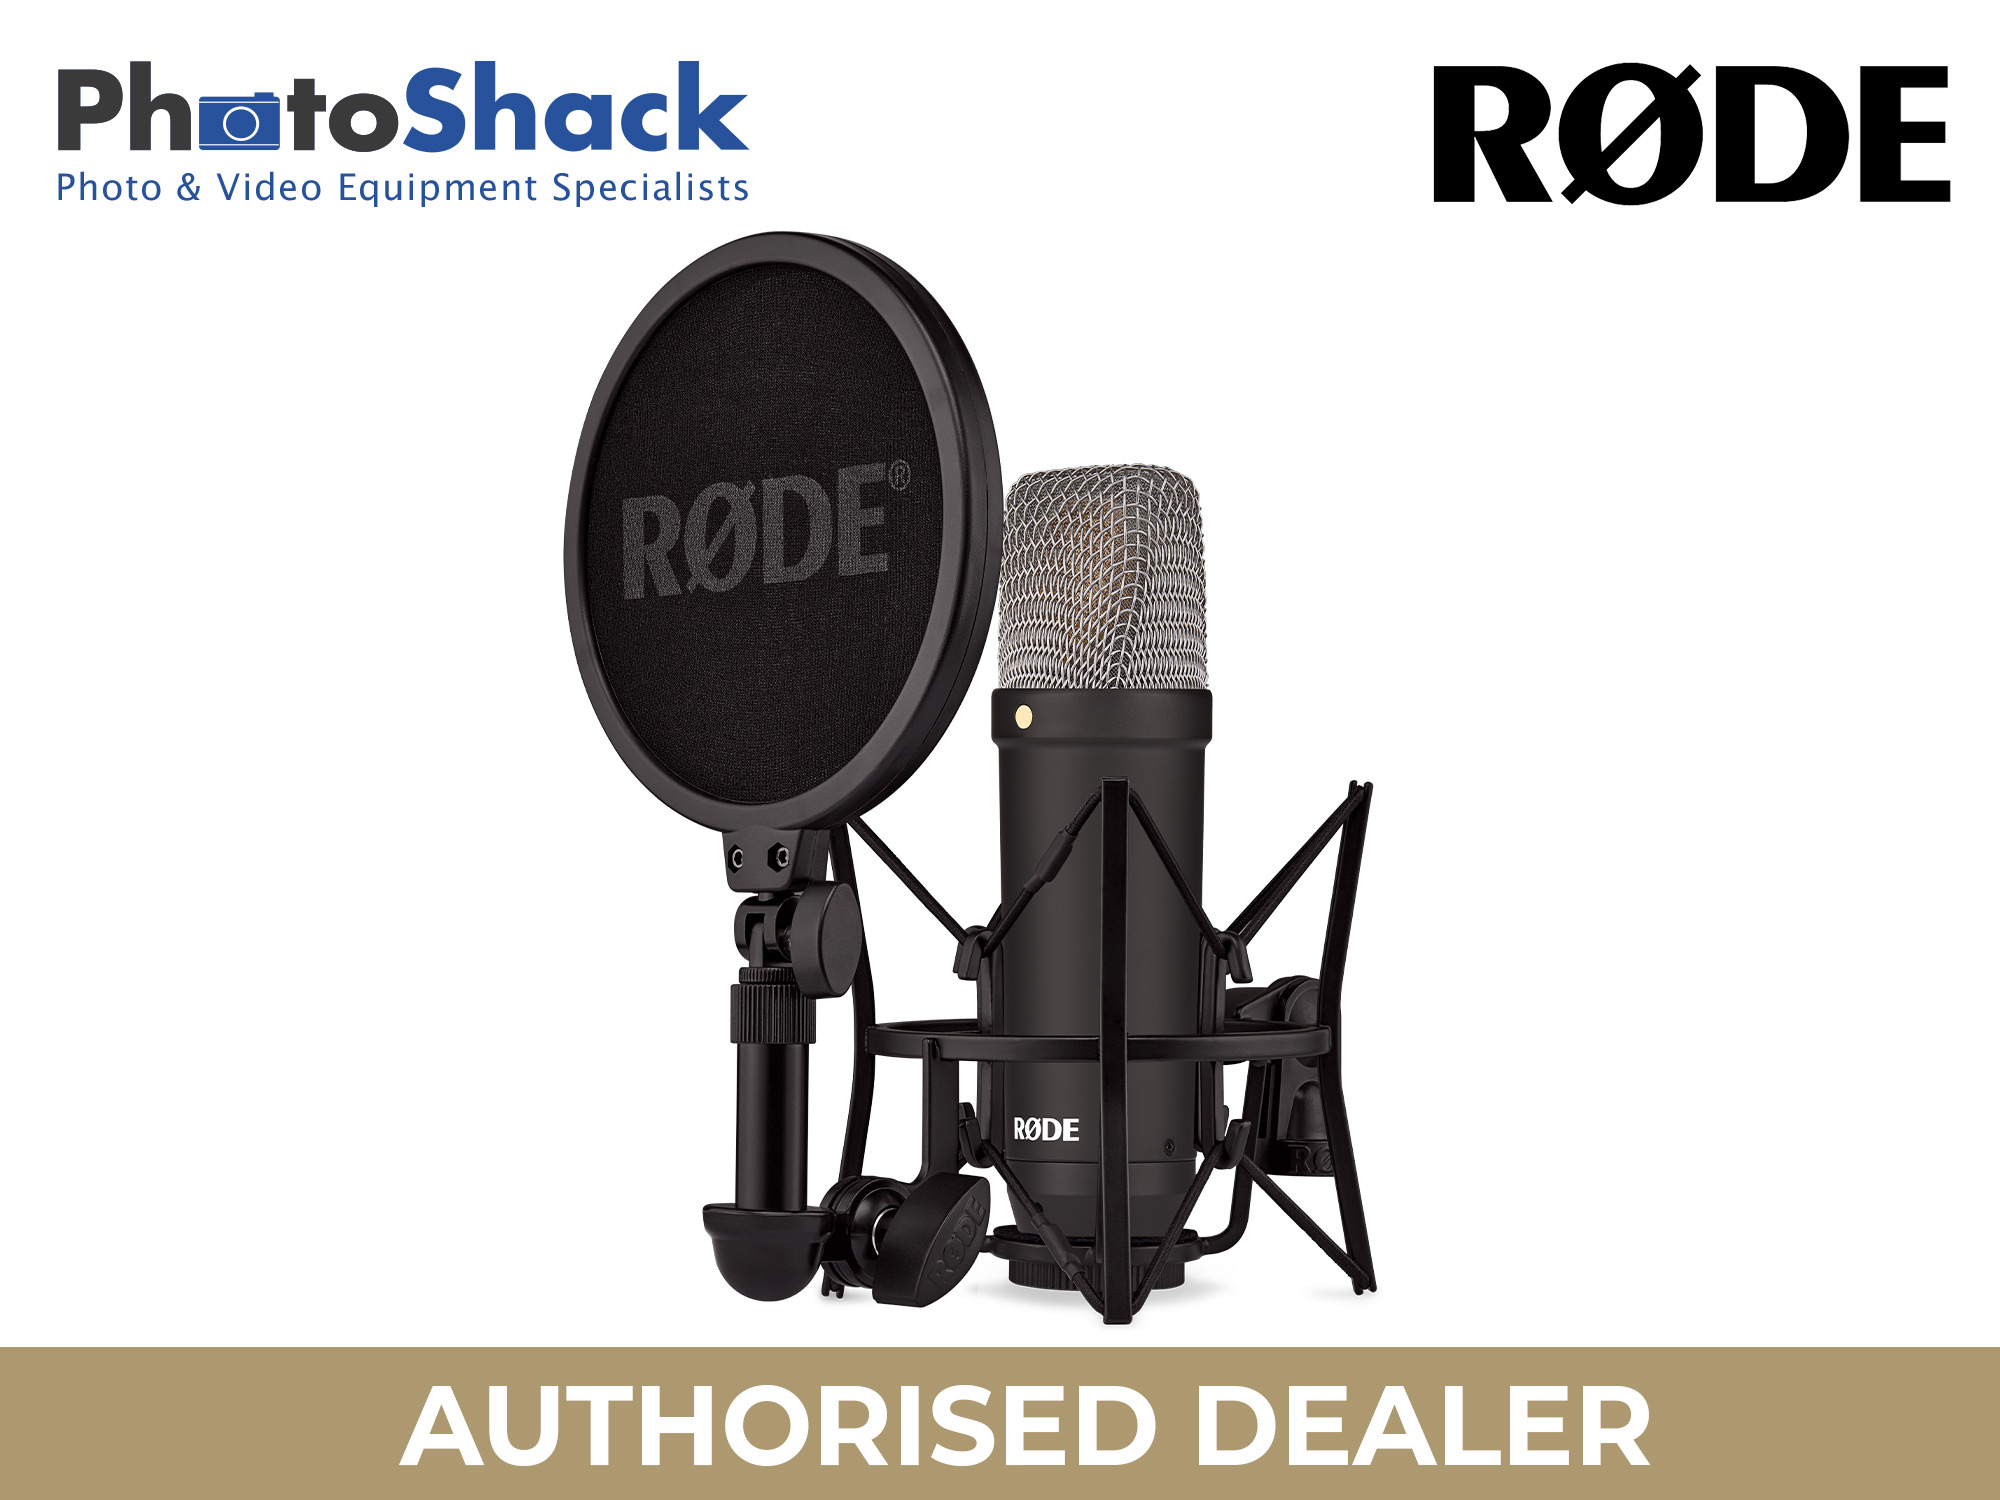 RODE NT1 Signature Series Studio Condenser Microphone